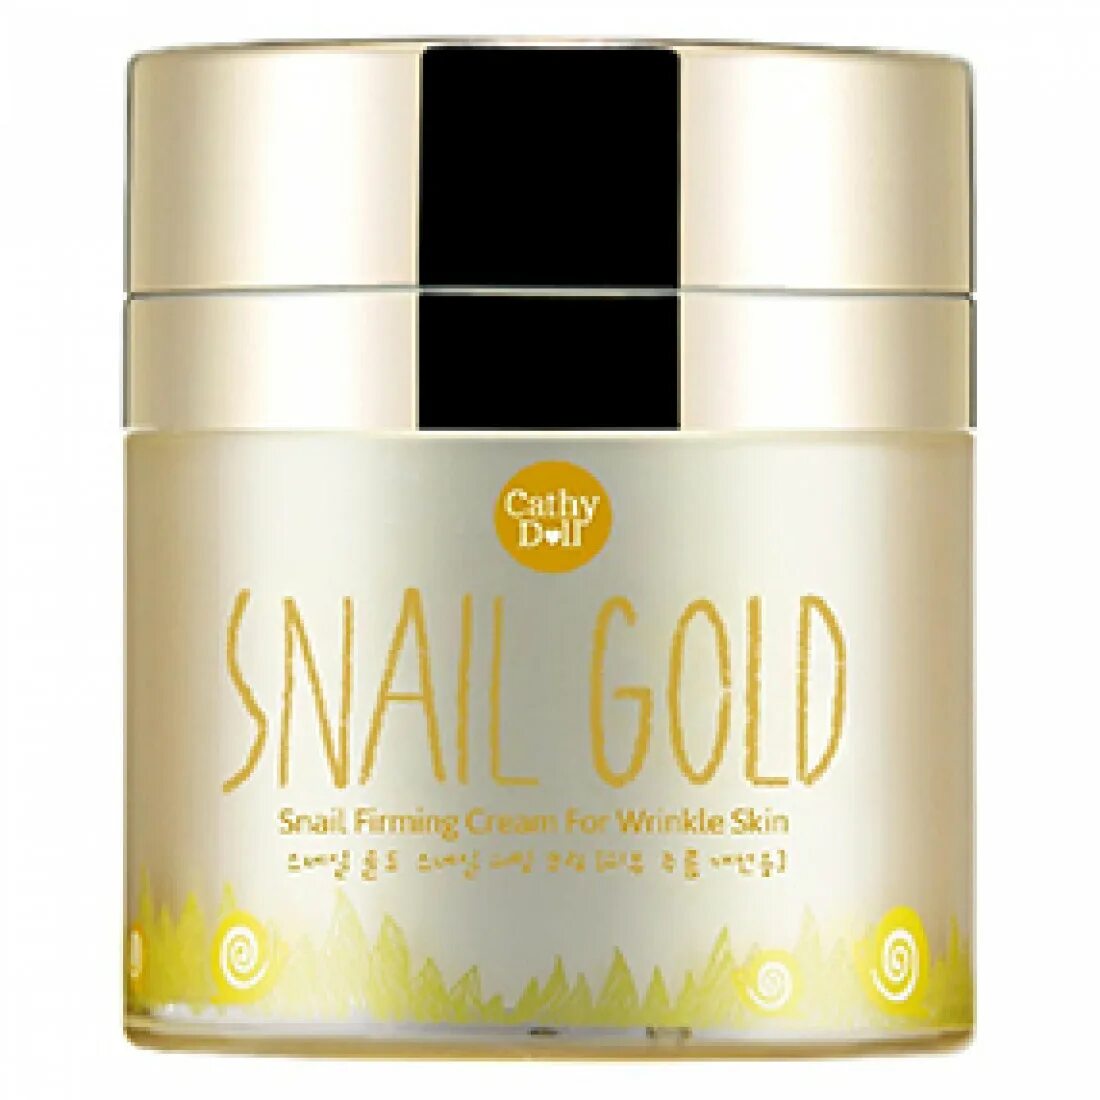 Золото улитка крем. Крем Cathy Doll Snail Gold. Cathy Doll Snail Gold Snail Firming Cream for Wrinkle Skin. Snail Gold крем Тайланд Cathy Doll. Крем для лица с золотом Cathy Doll.